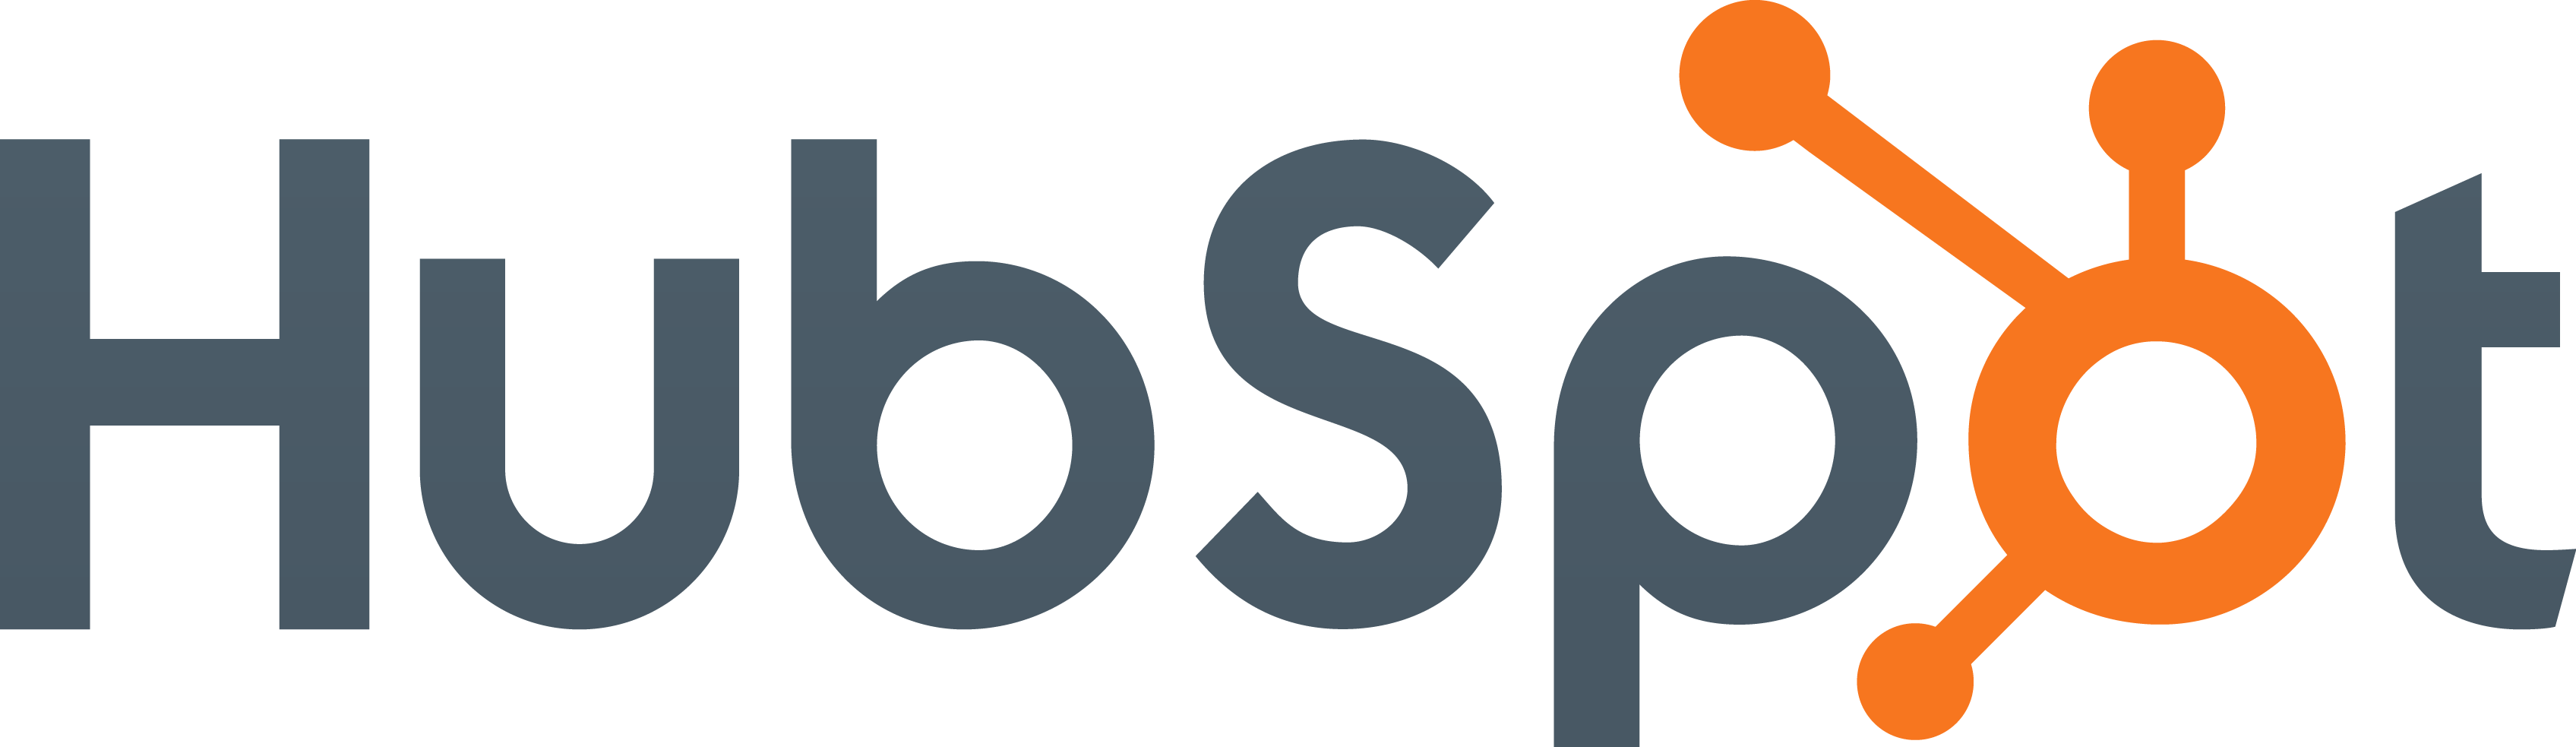 HubSpot Launches Jumpstart Grant Program for Startups